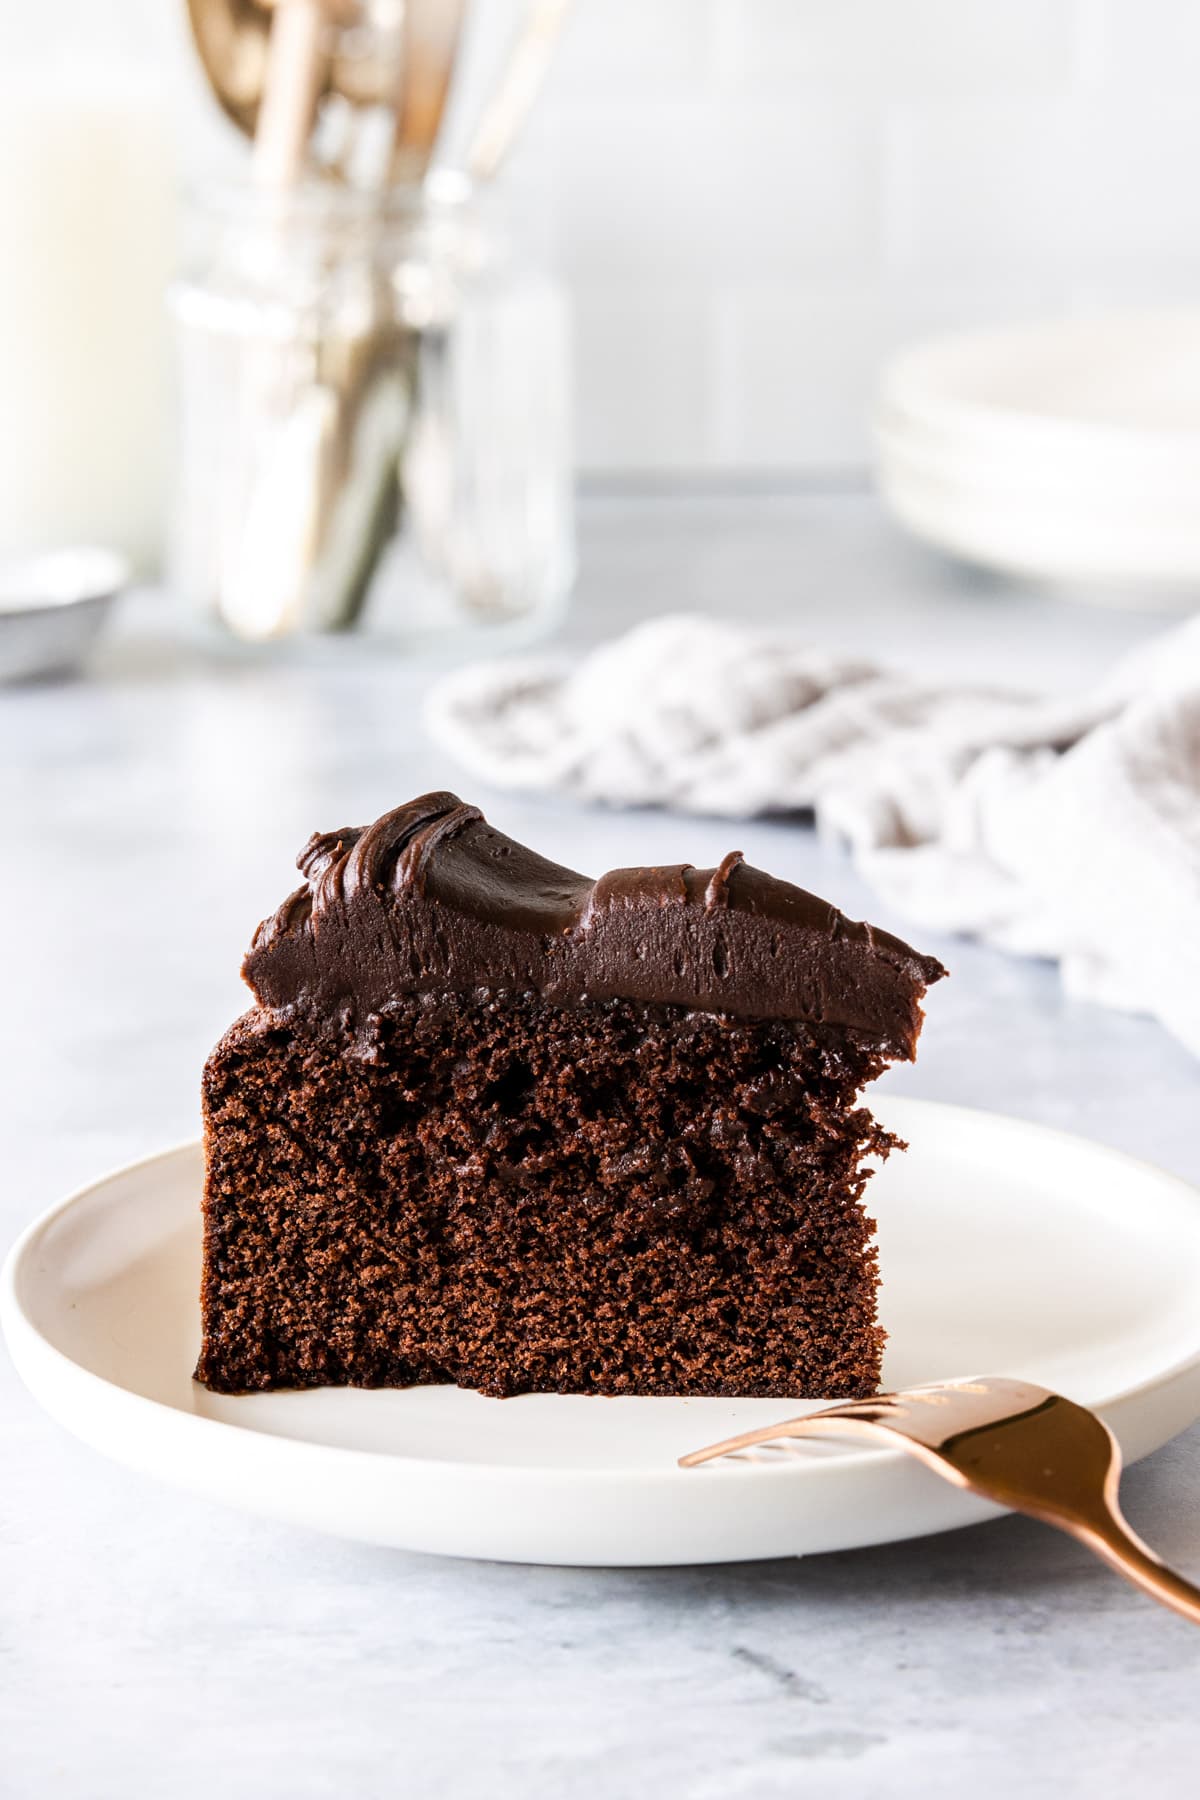 A slice of chocolate cake stood up on a plate